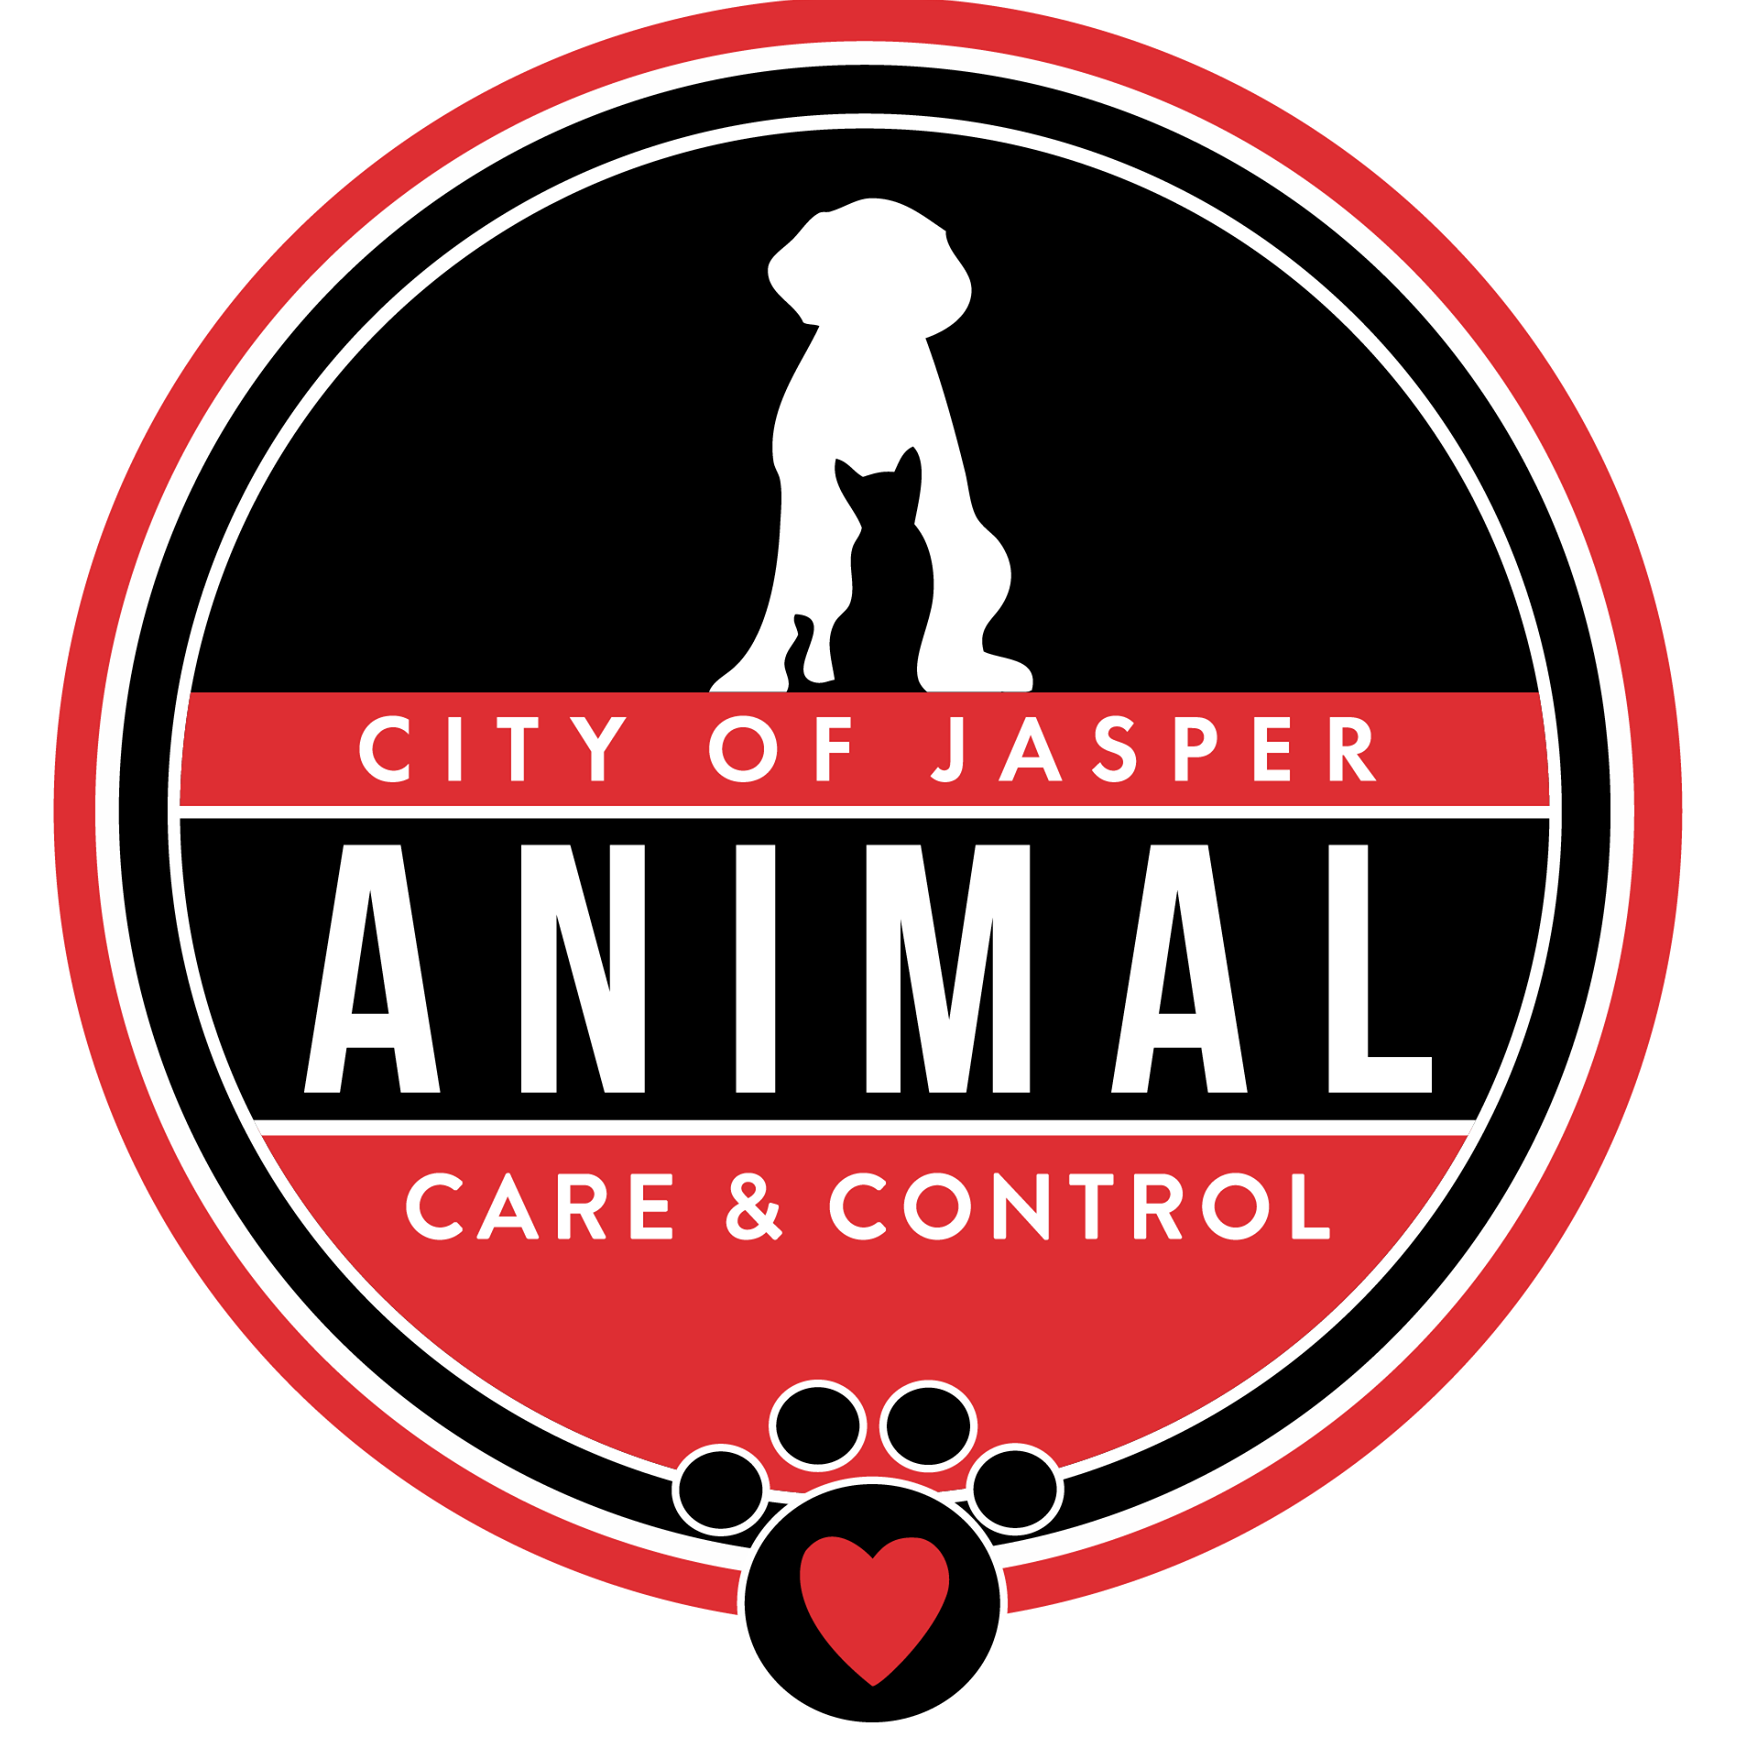 Animal Care & Control logo